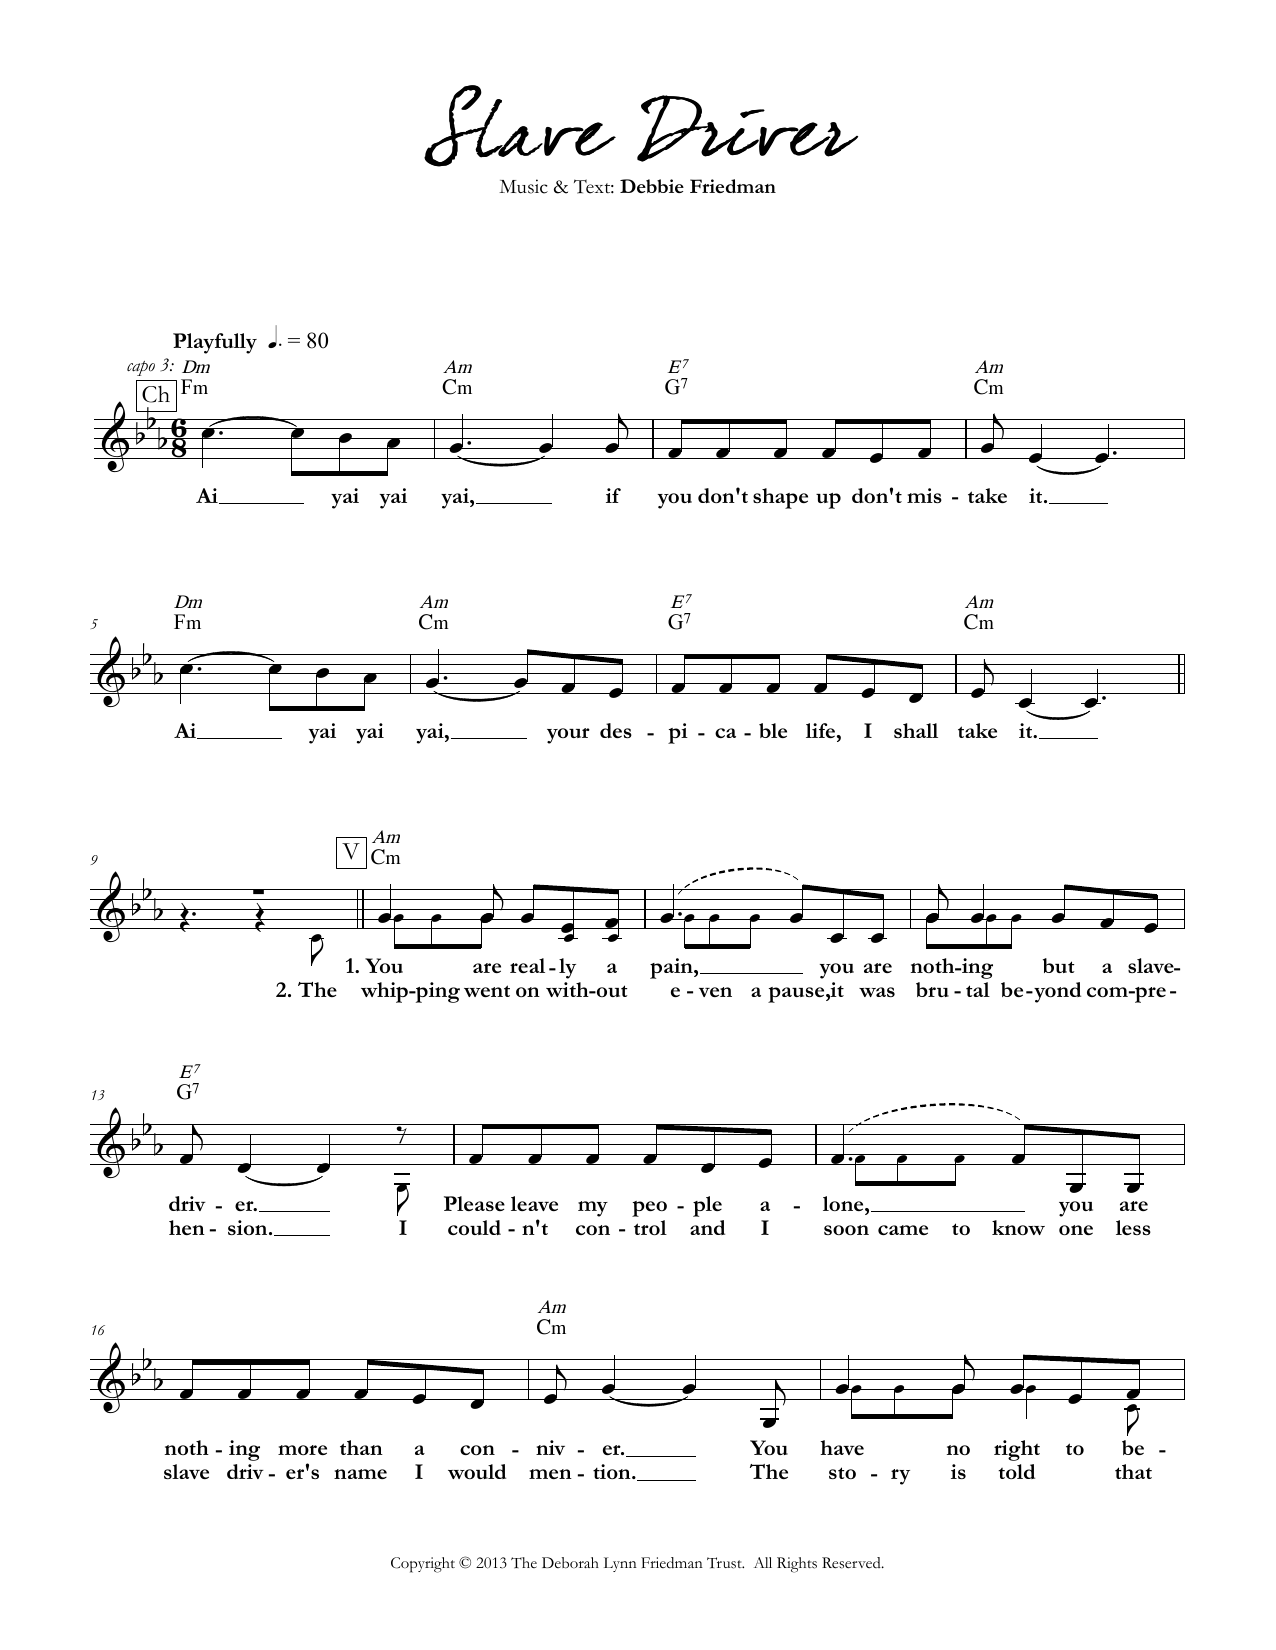 Debbie Friedman Slave Driver Sheet Music Notes & Chords for Lead Sheet / Fake Book - Download or Print PDF